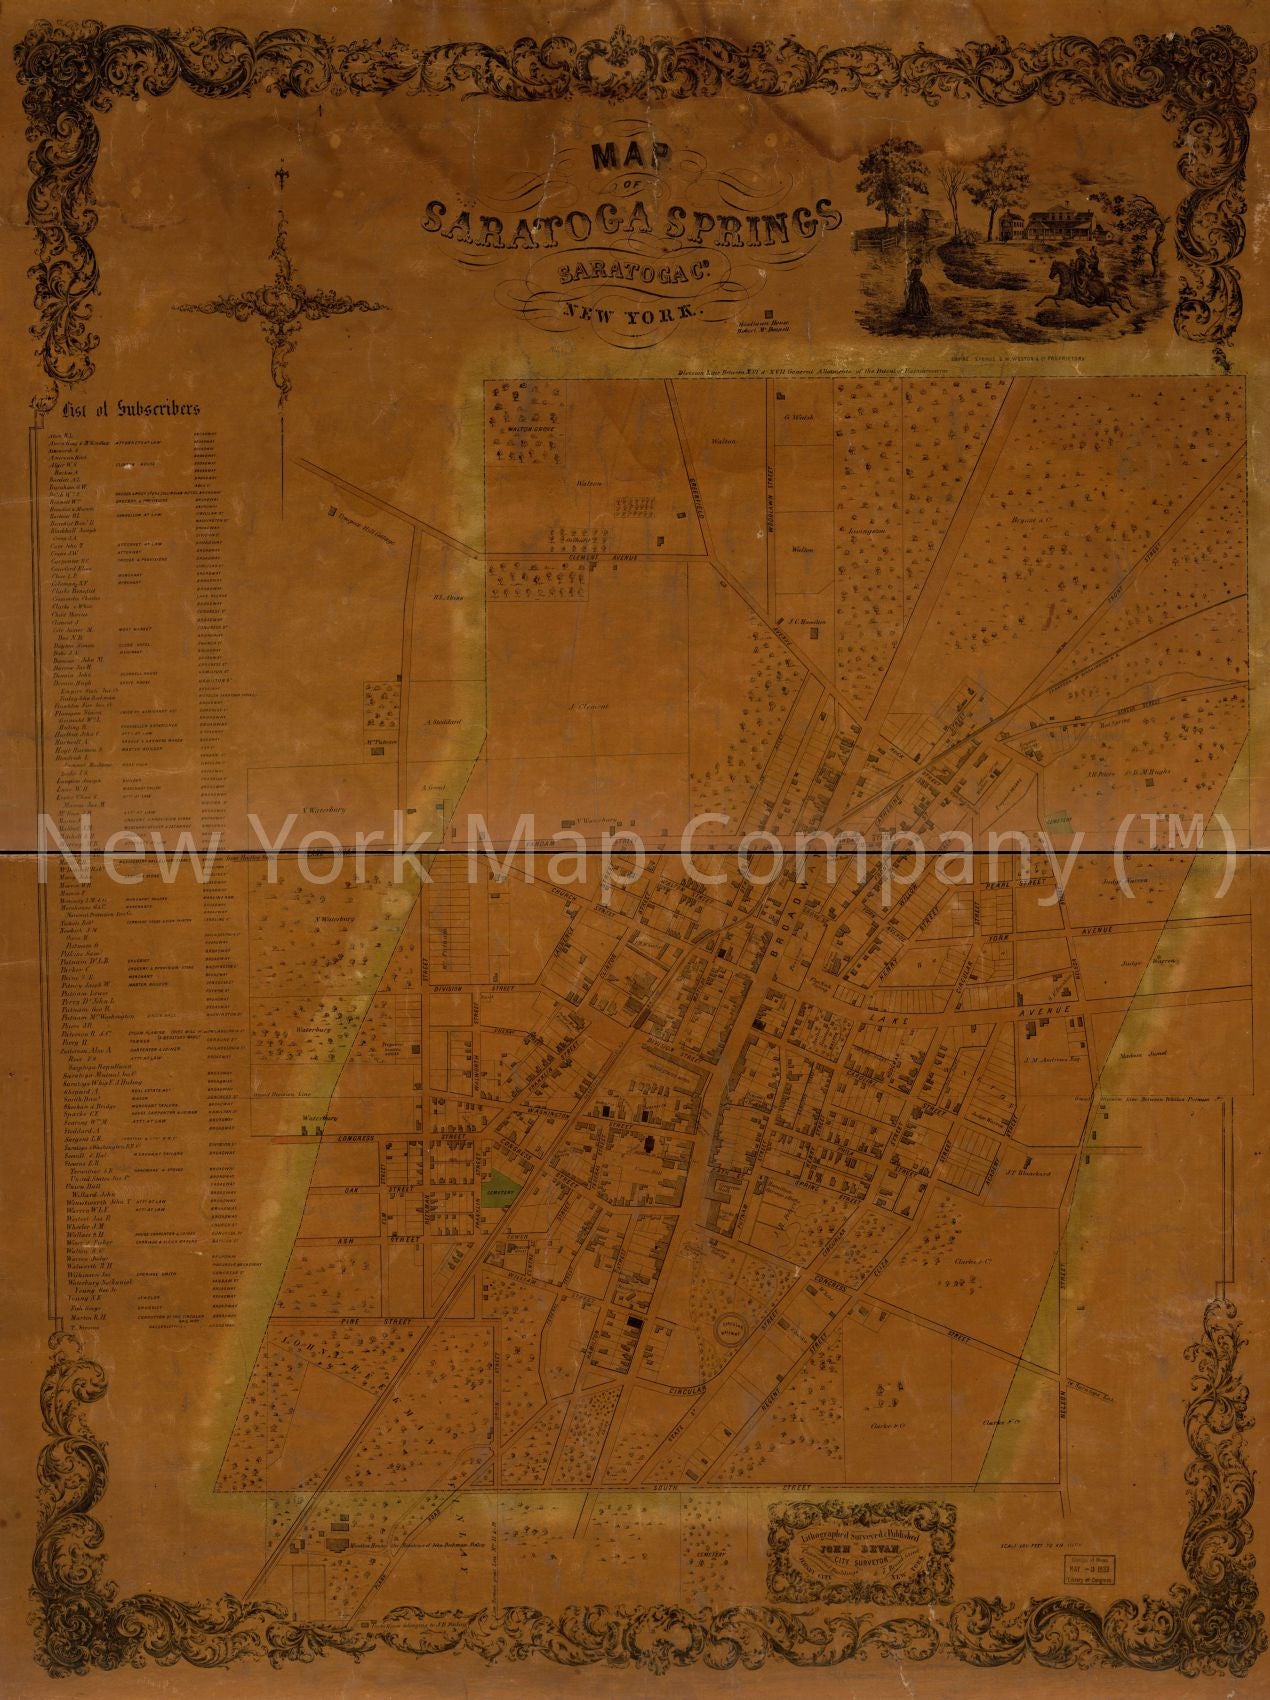 1850 map of Saratoga Springs, Saratoga Ct., New York. Map Subjects: New York | Saratoga Springs | Saratoga Springs NY |